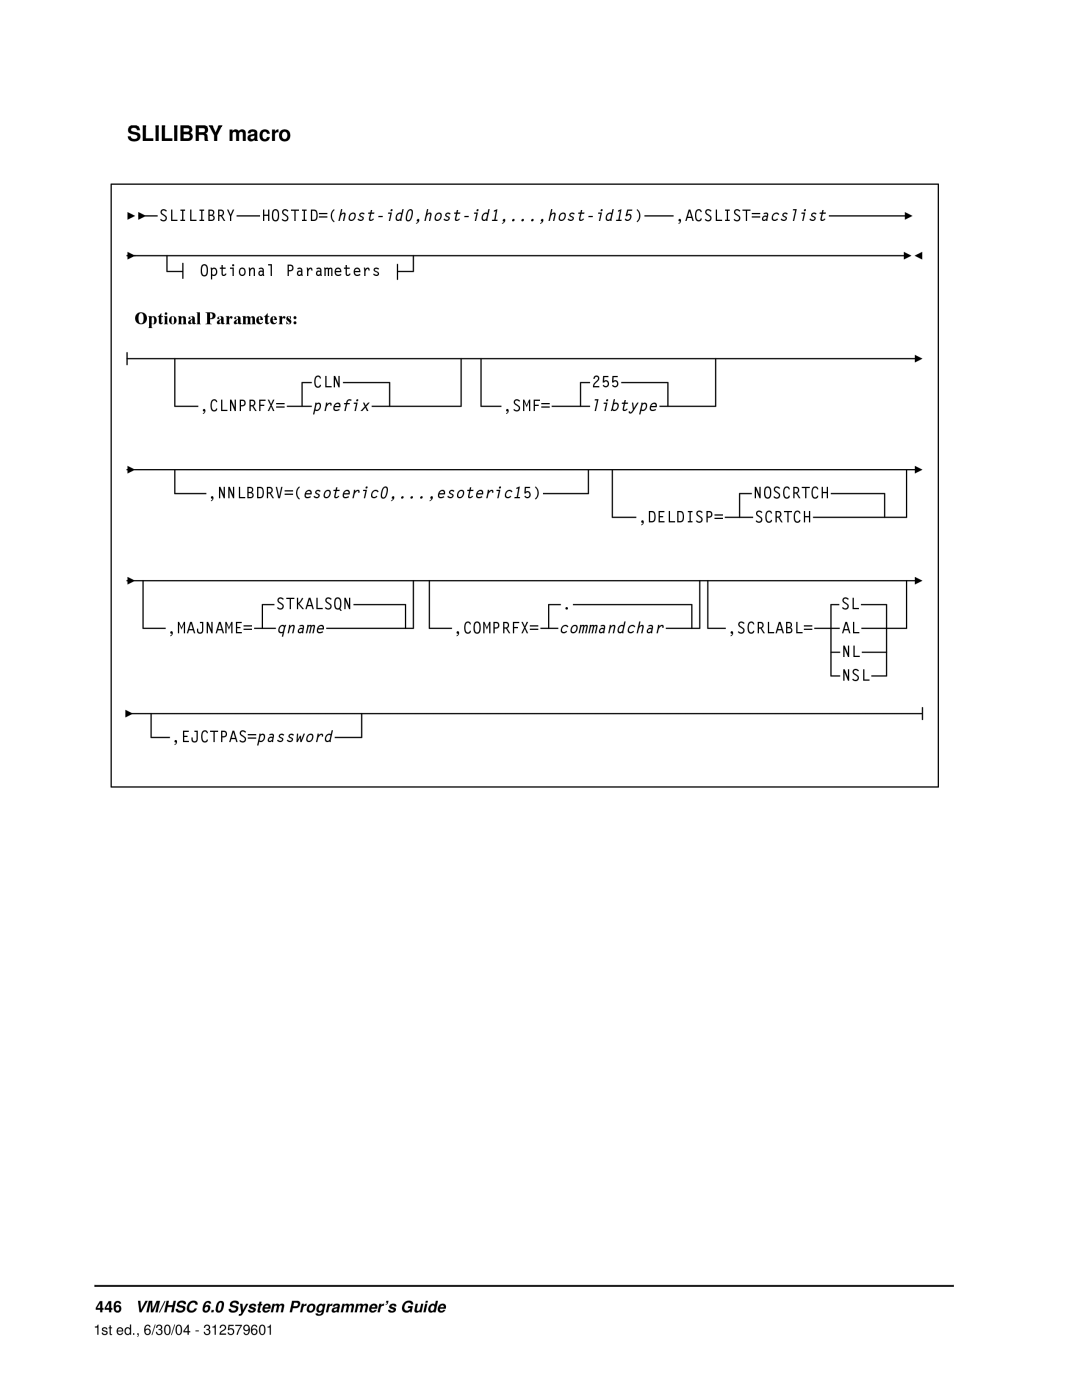 StorageTek manual SLILIBRY macro, 446VM/HSC 6.0 System Programmer’s Guide, 1st ed., 6/30/04 